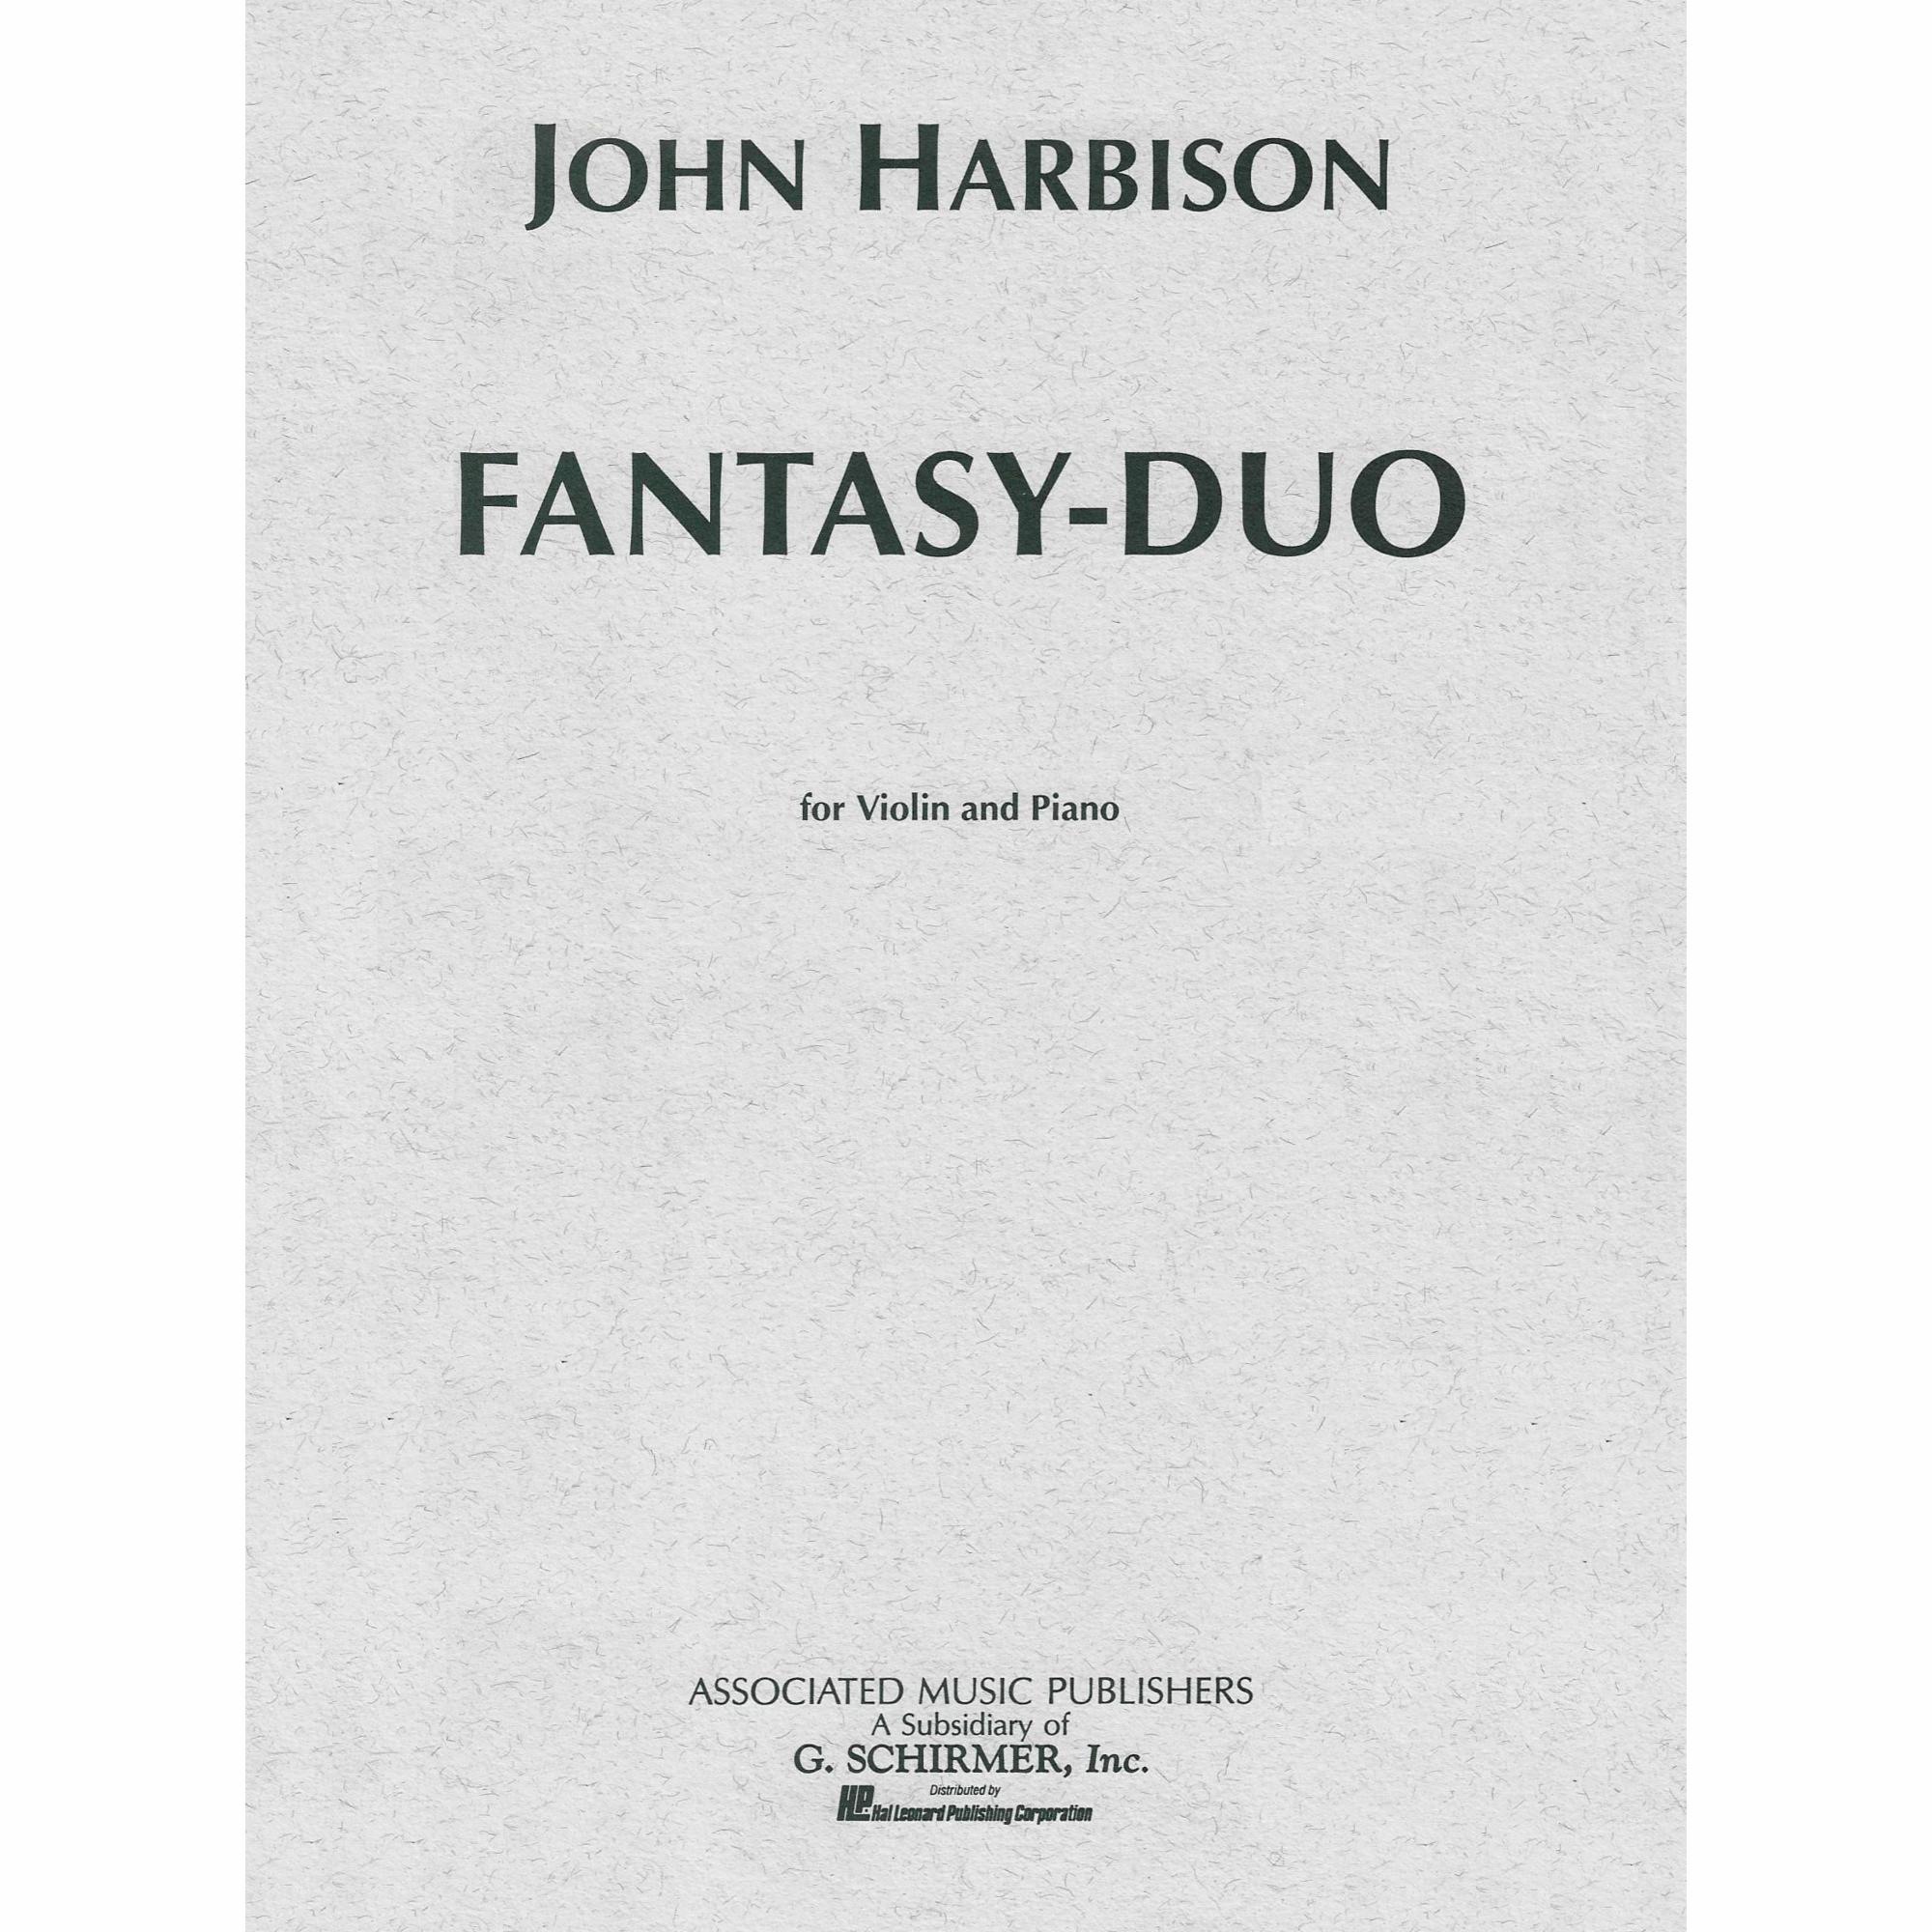 Harbison -- Fantasy-Duo for Violin and Piano